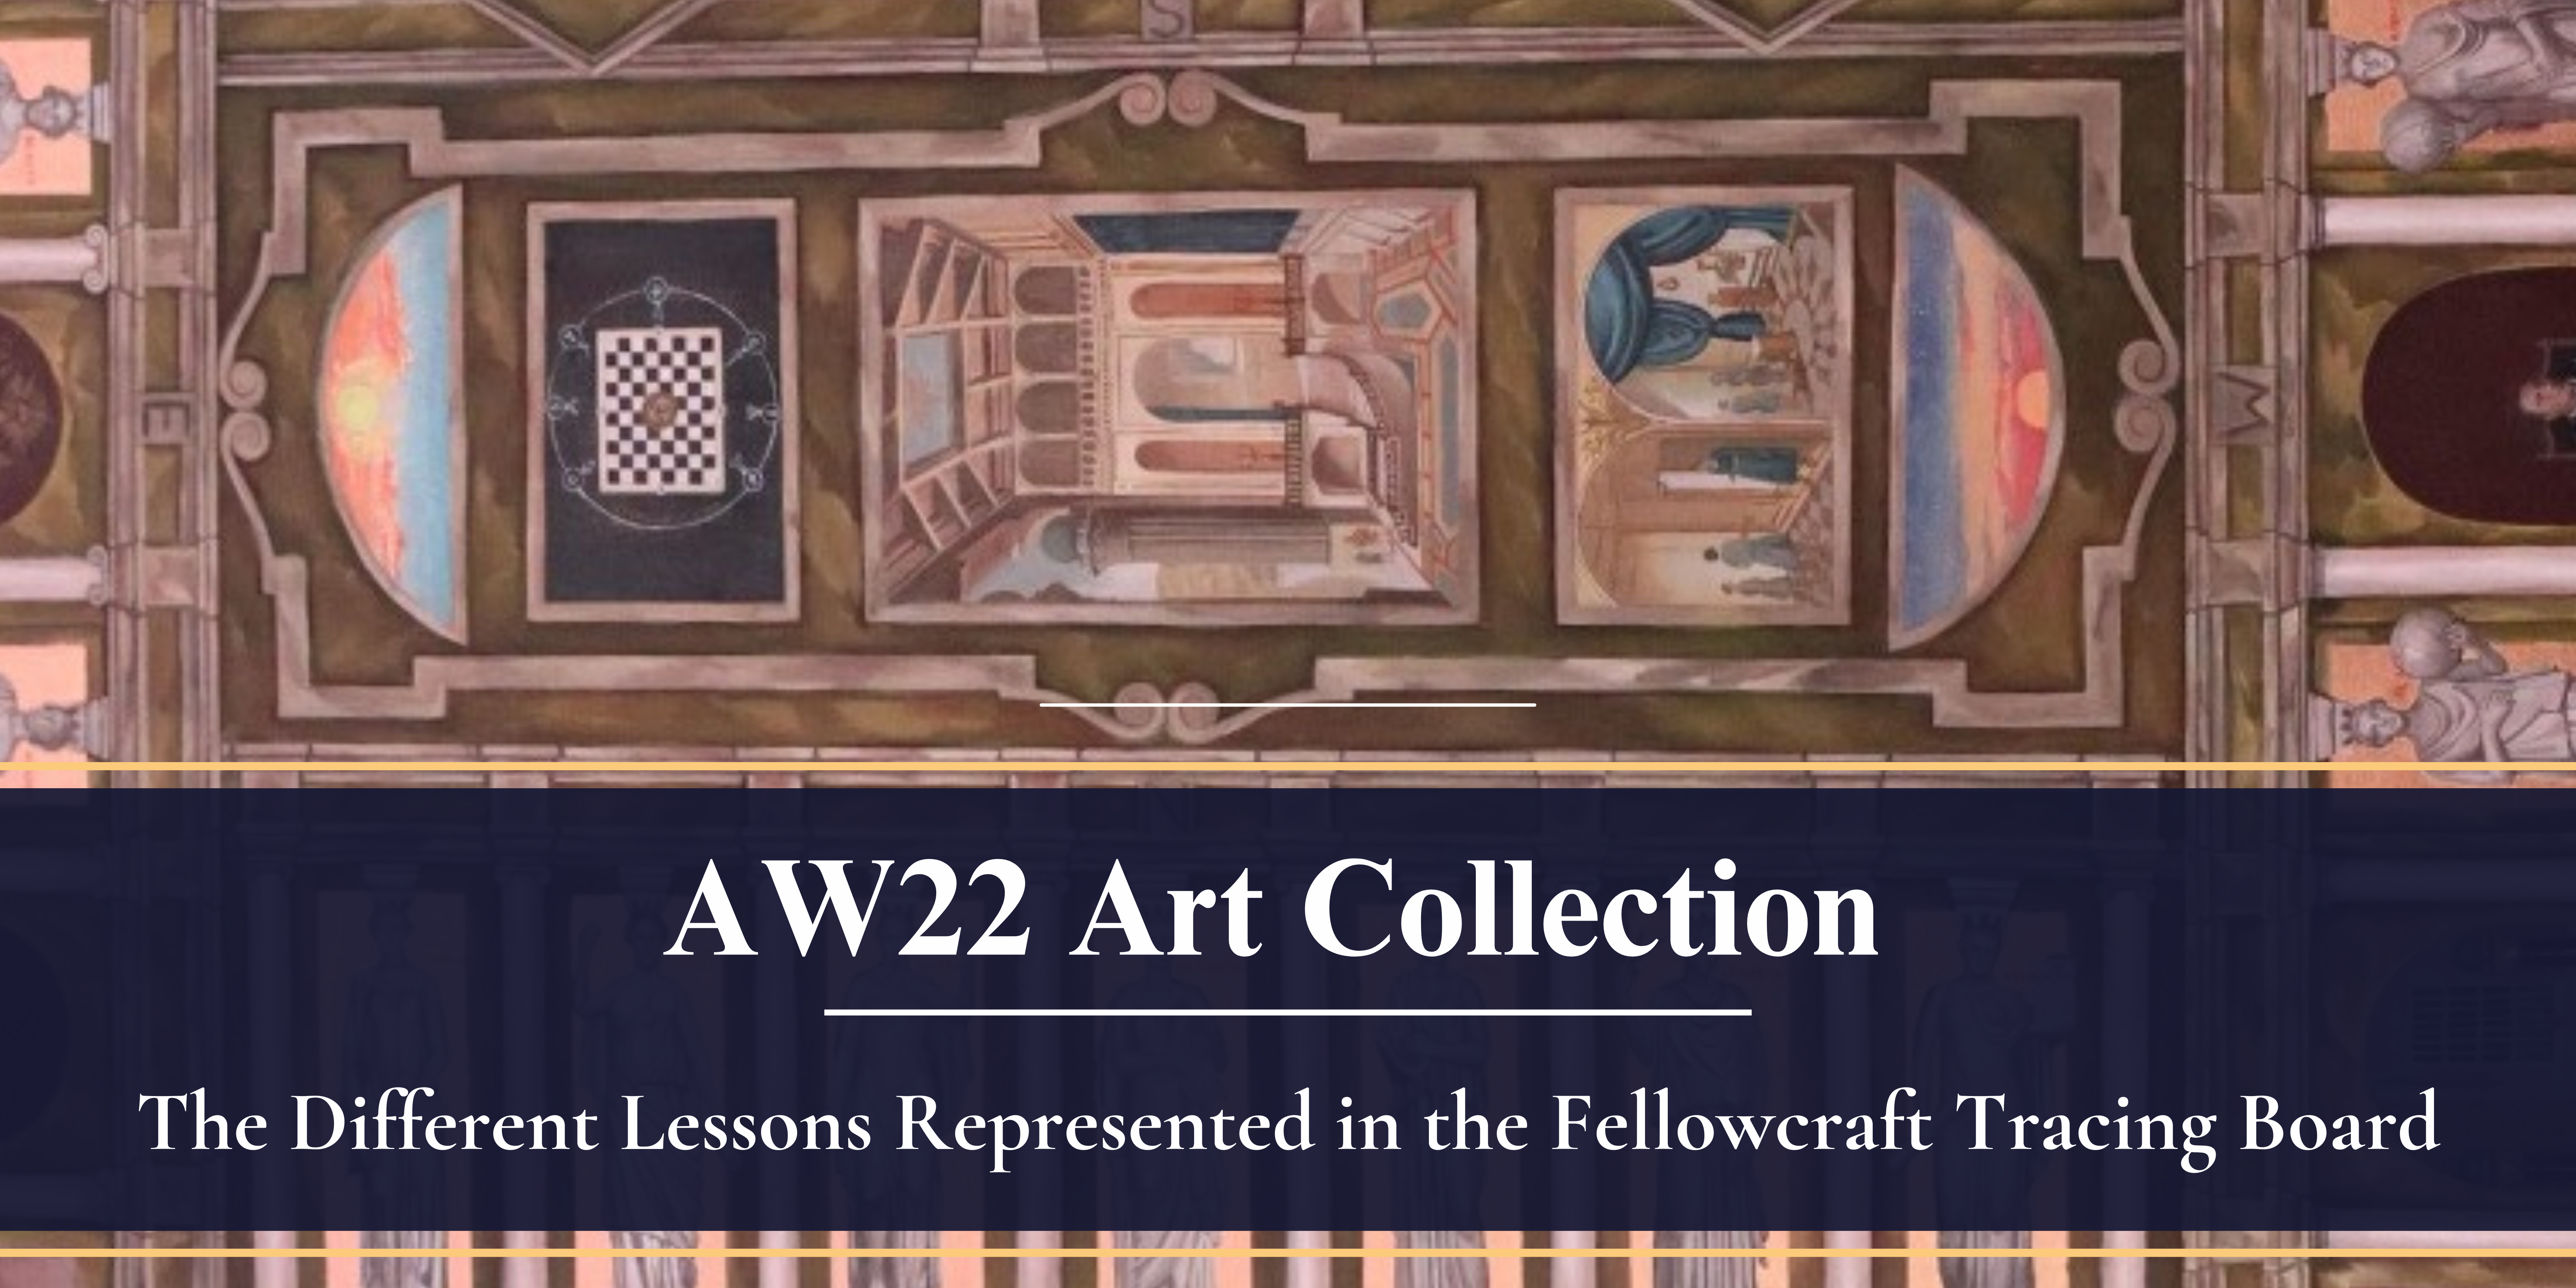 The AW22 Fellowcraft Tracing Board - Alexandria-Washington Lodge No. 22